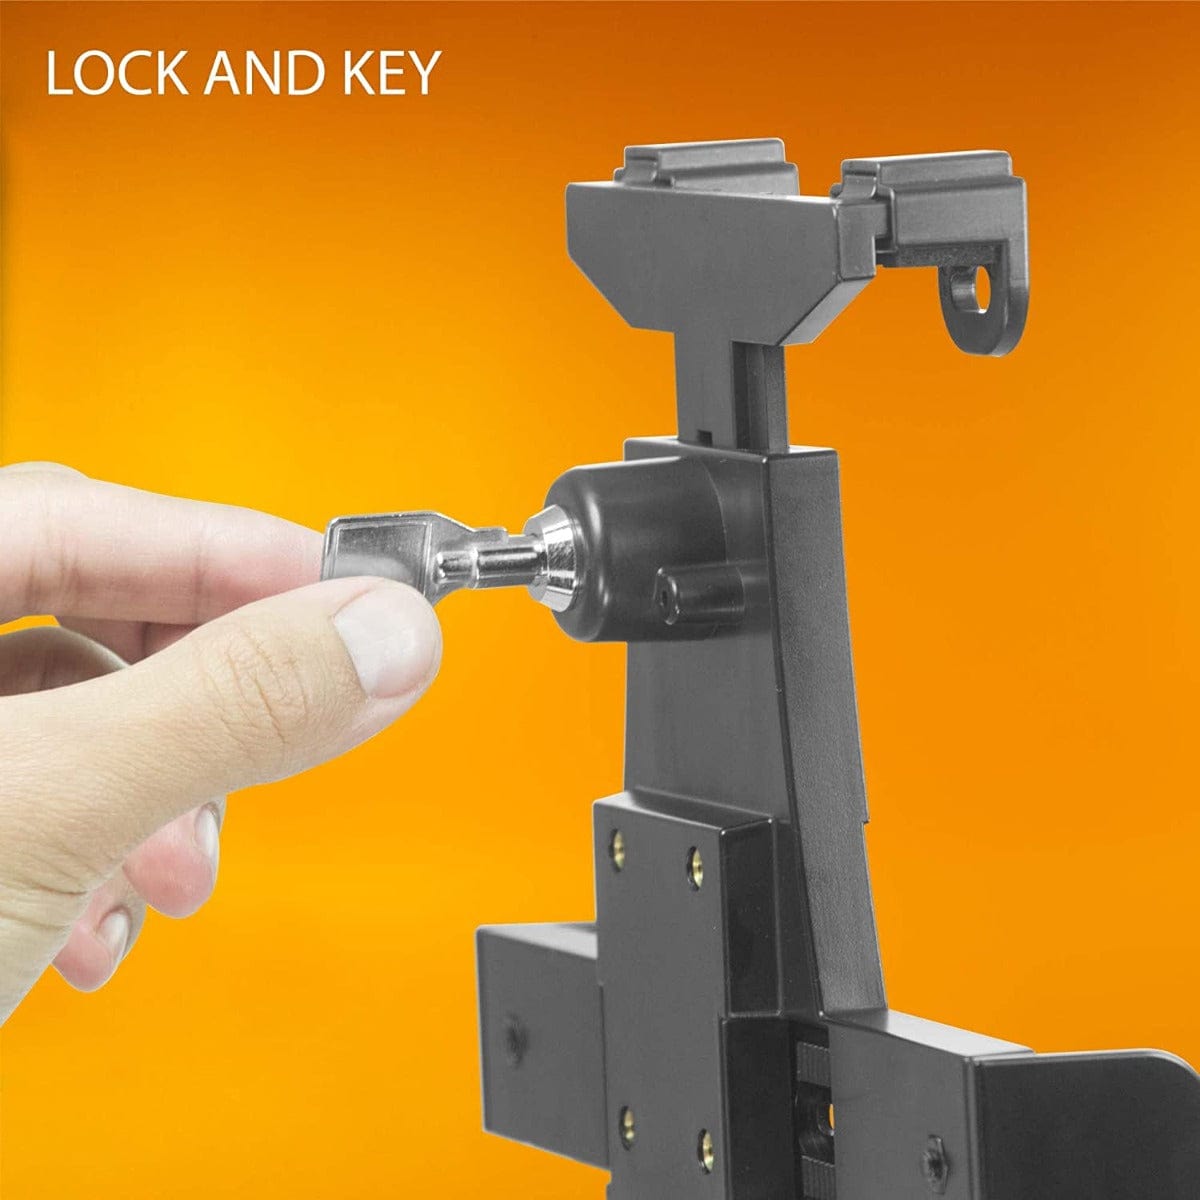 iBOLT Dock’n Lock Bizmount™- Forklift Locking Tablet Mount